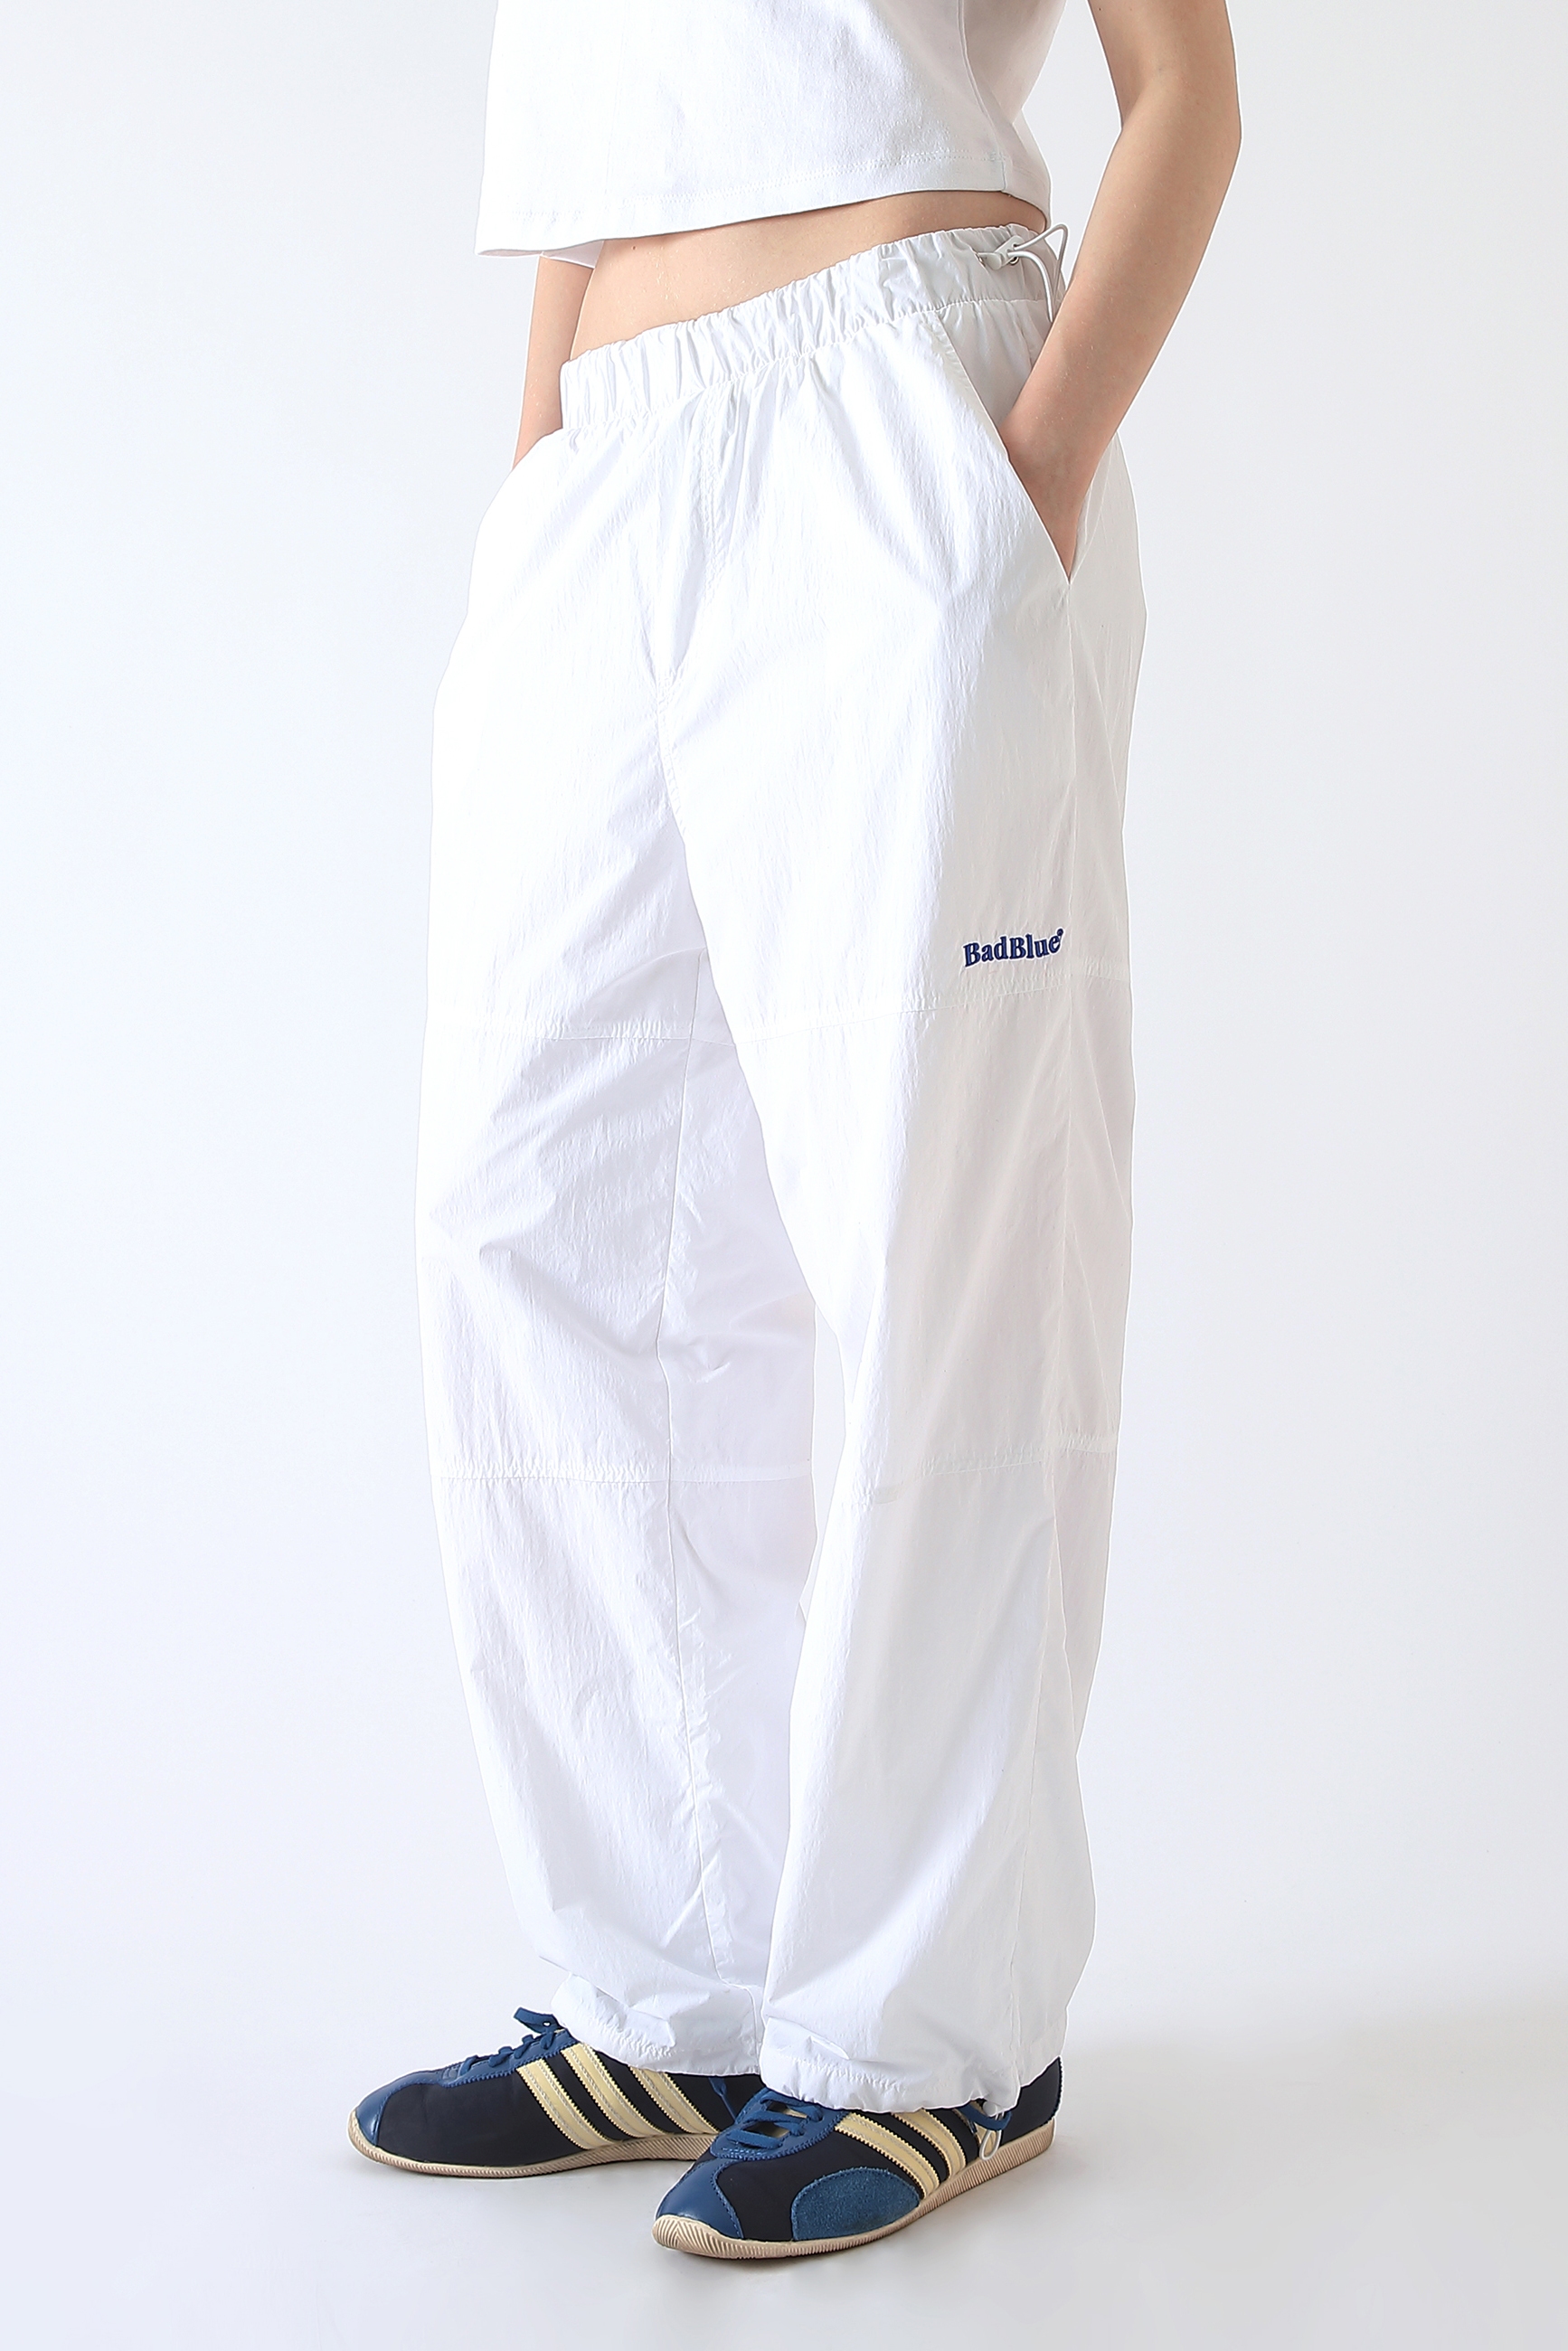 BADBLUE(배드블루) Parachute Pants White | S.I.VILLAGE (에스아이빌리지)